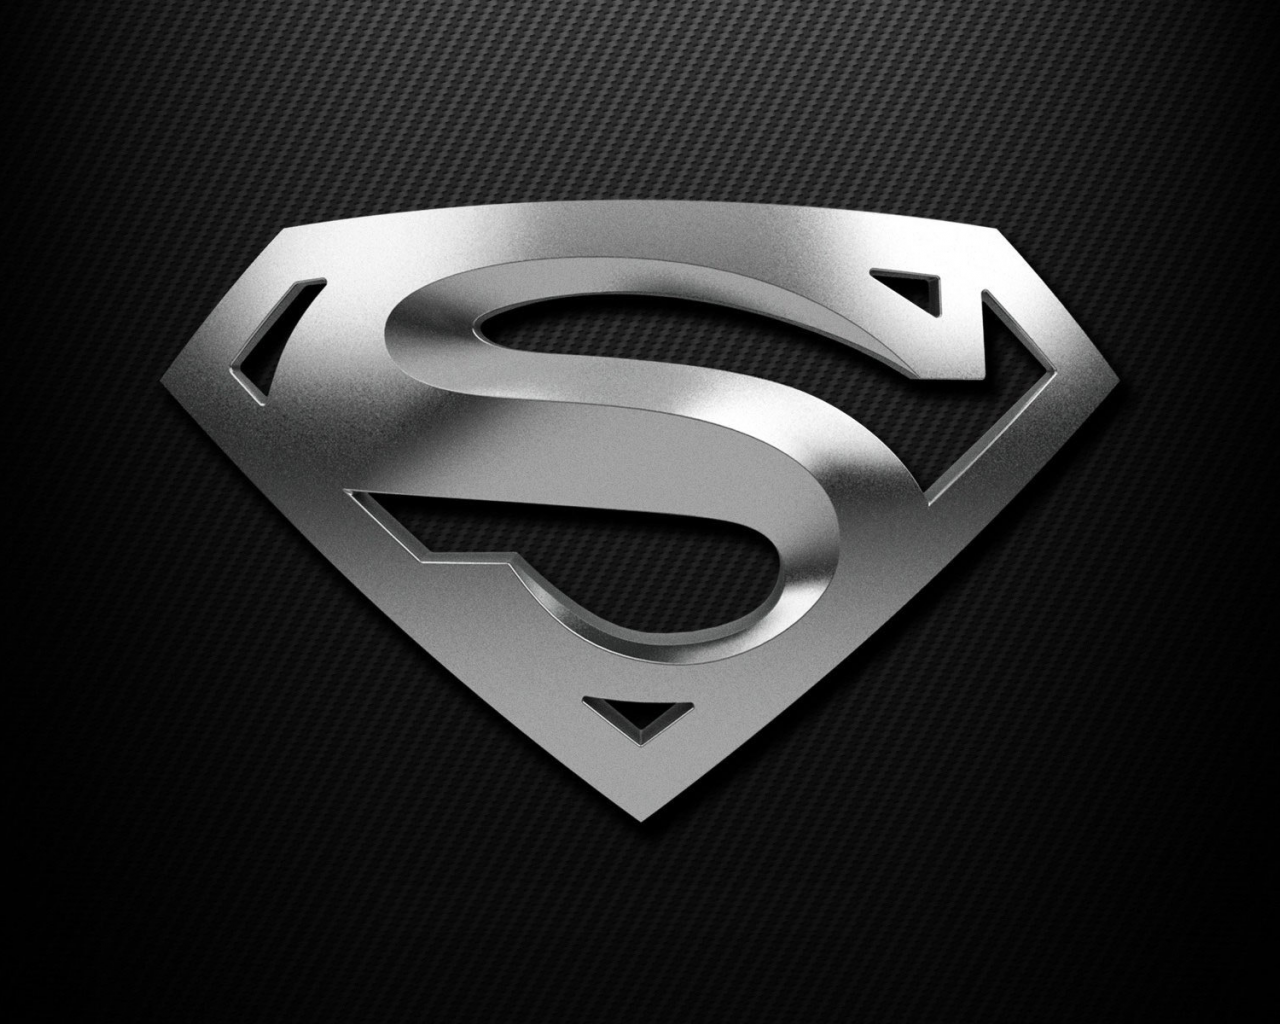 balck, superman, silver, shield, gray